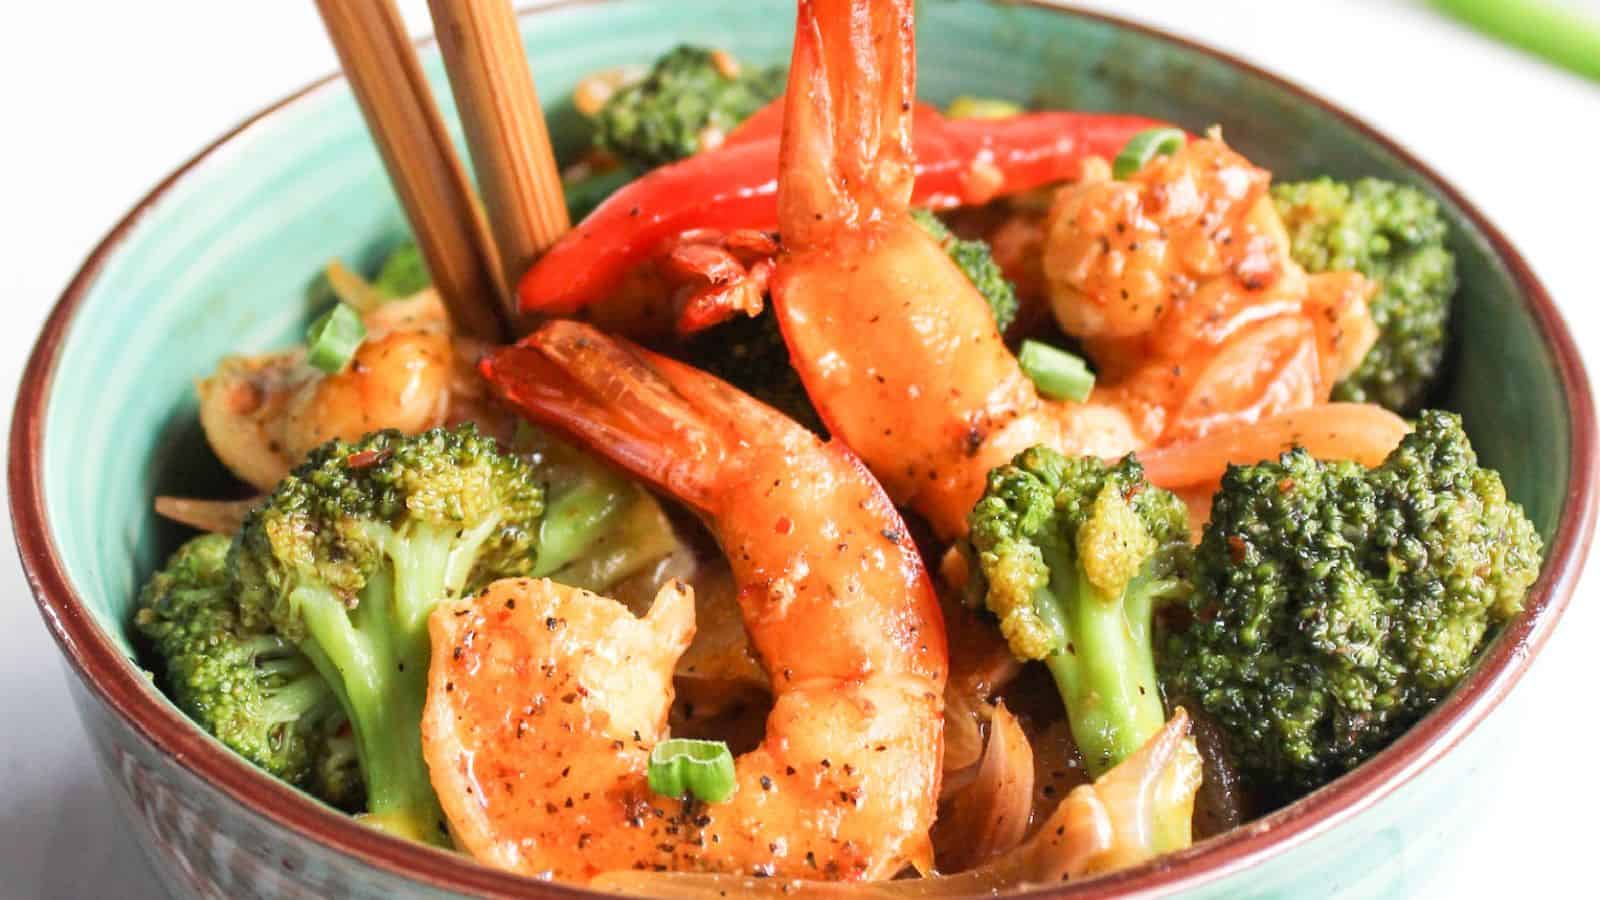 Shrimp and broccoli stir-fry in a bowl.